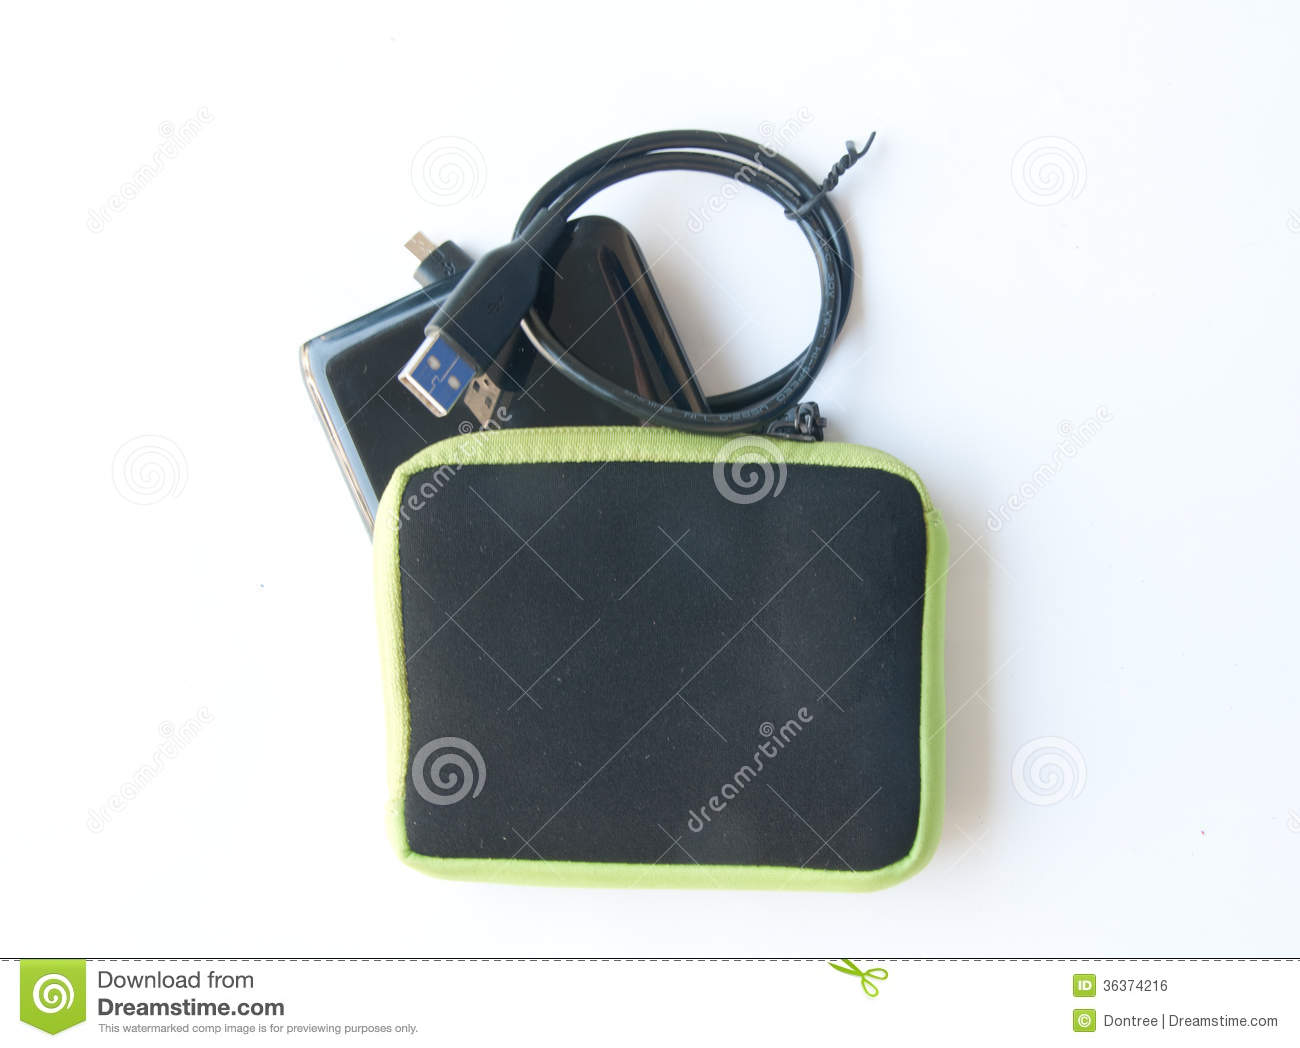 Portable External Hard Disk Royalty Free Stock Image   Image  36374216